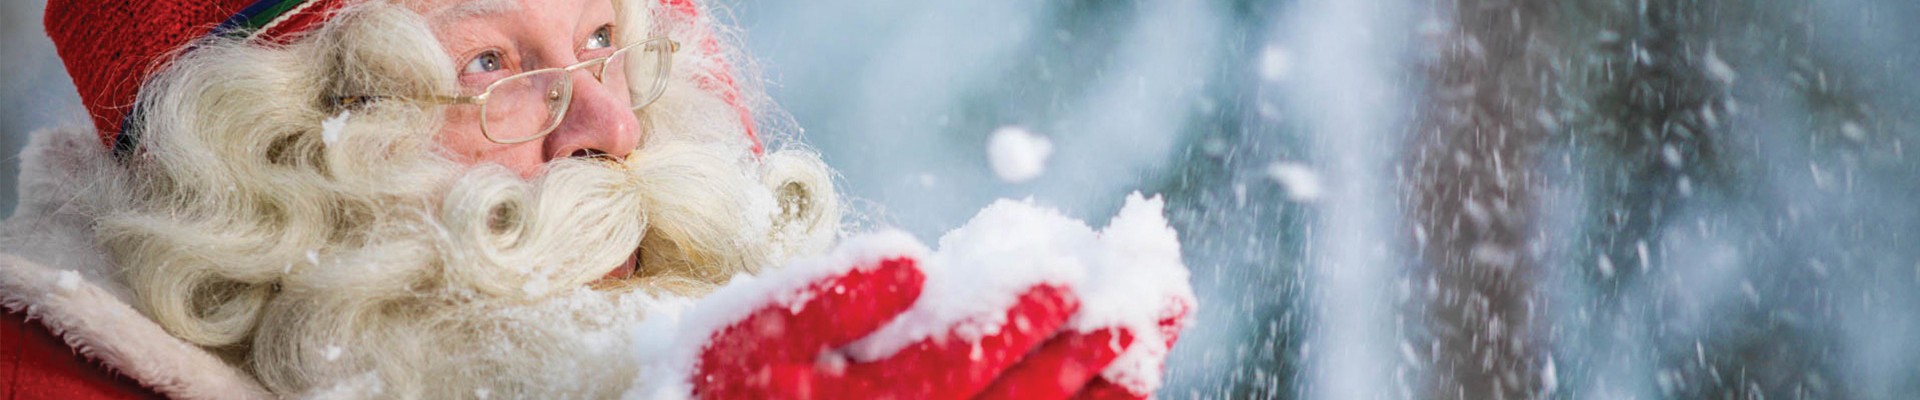 4* Santa Claus Holiday Village - Lapland Experience (5 nights)